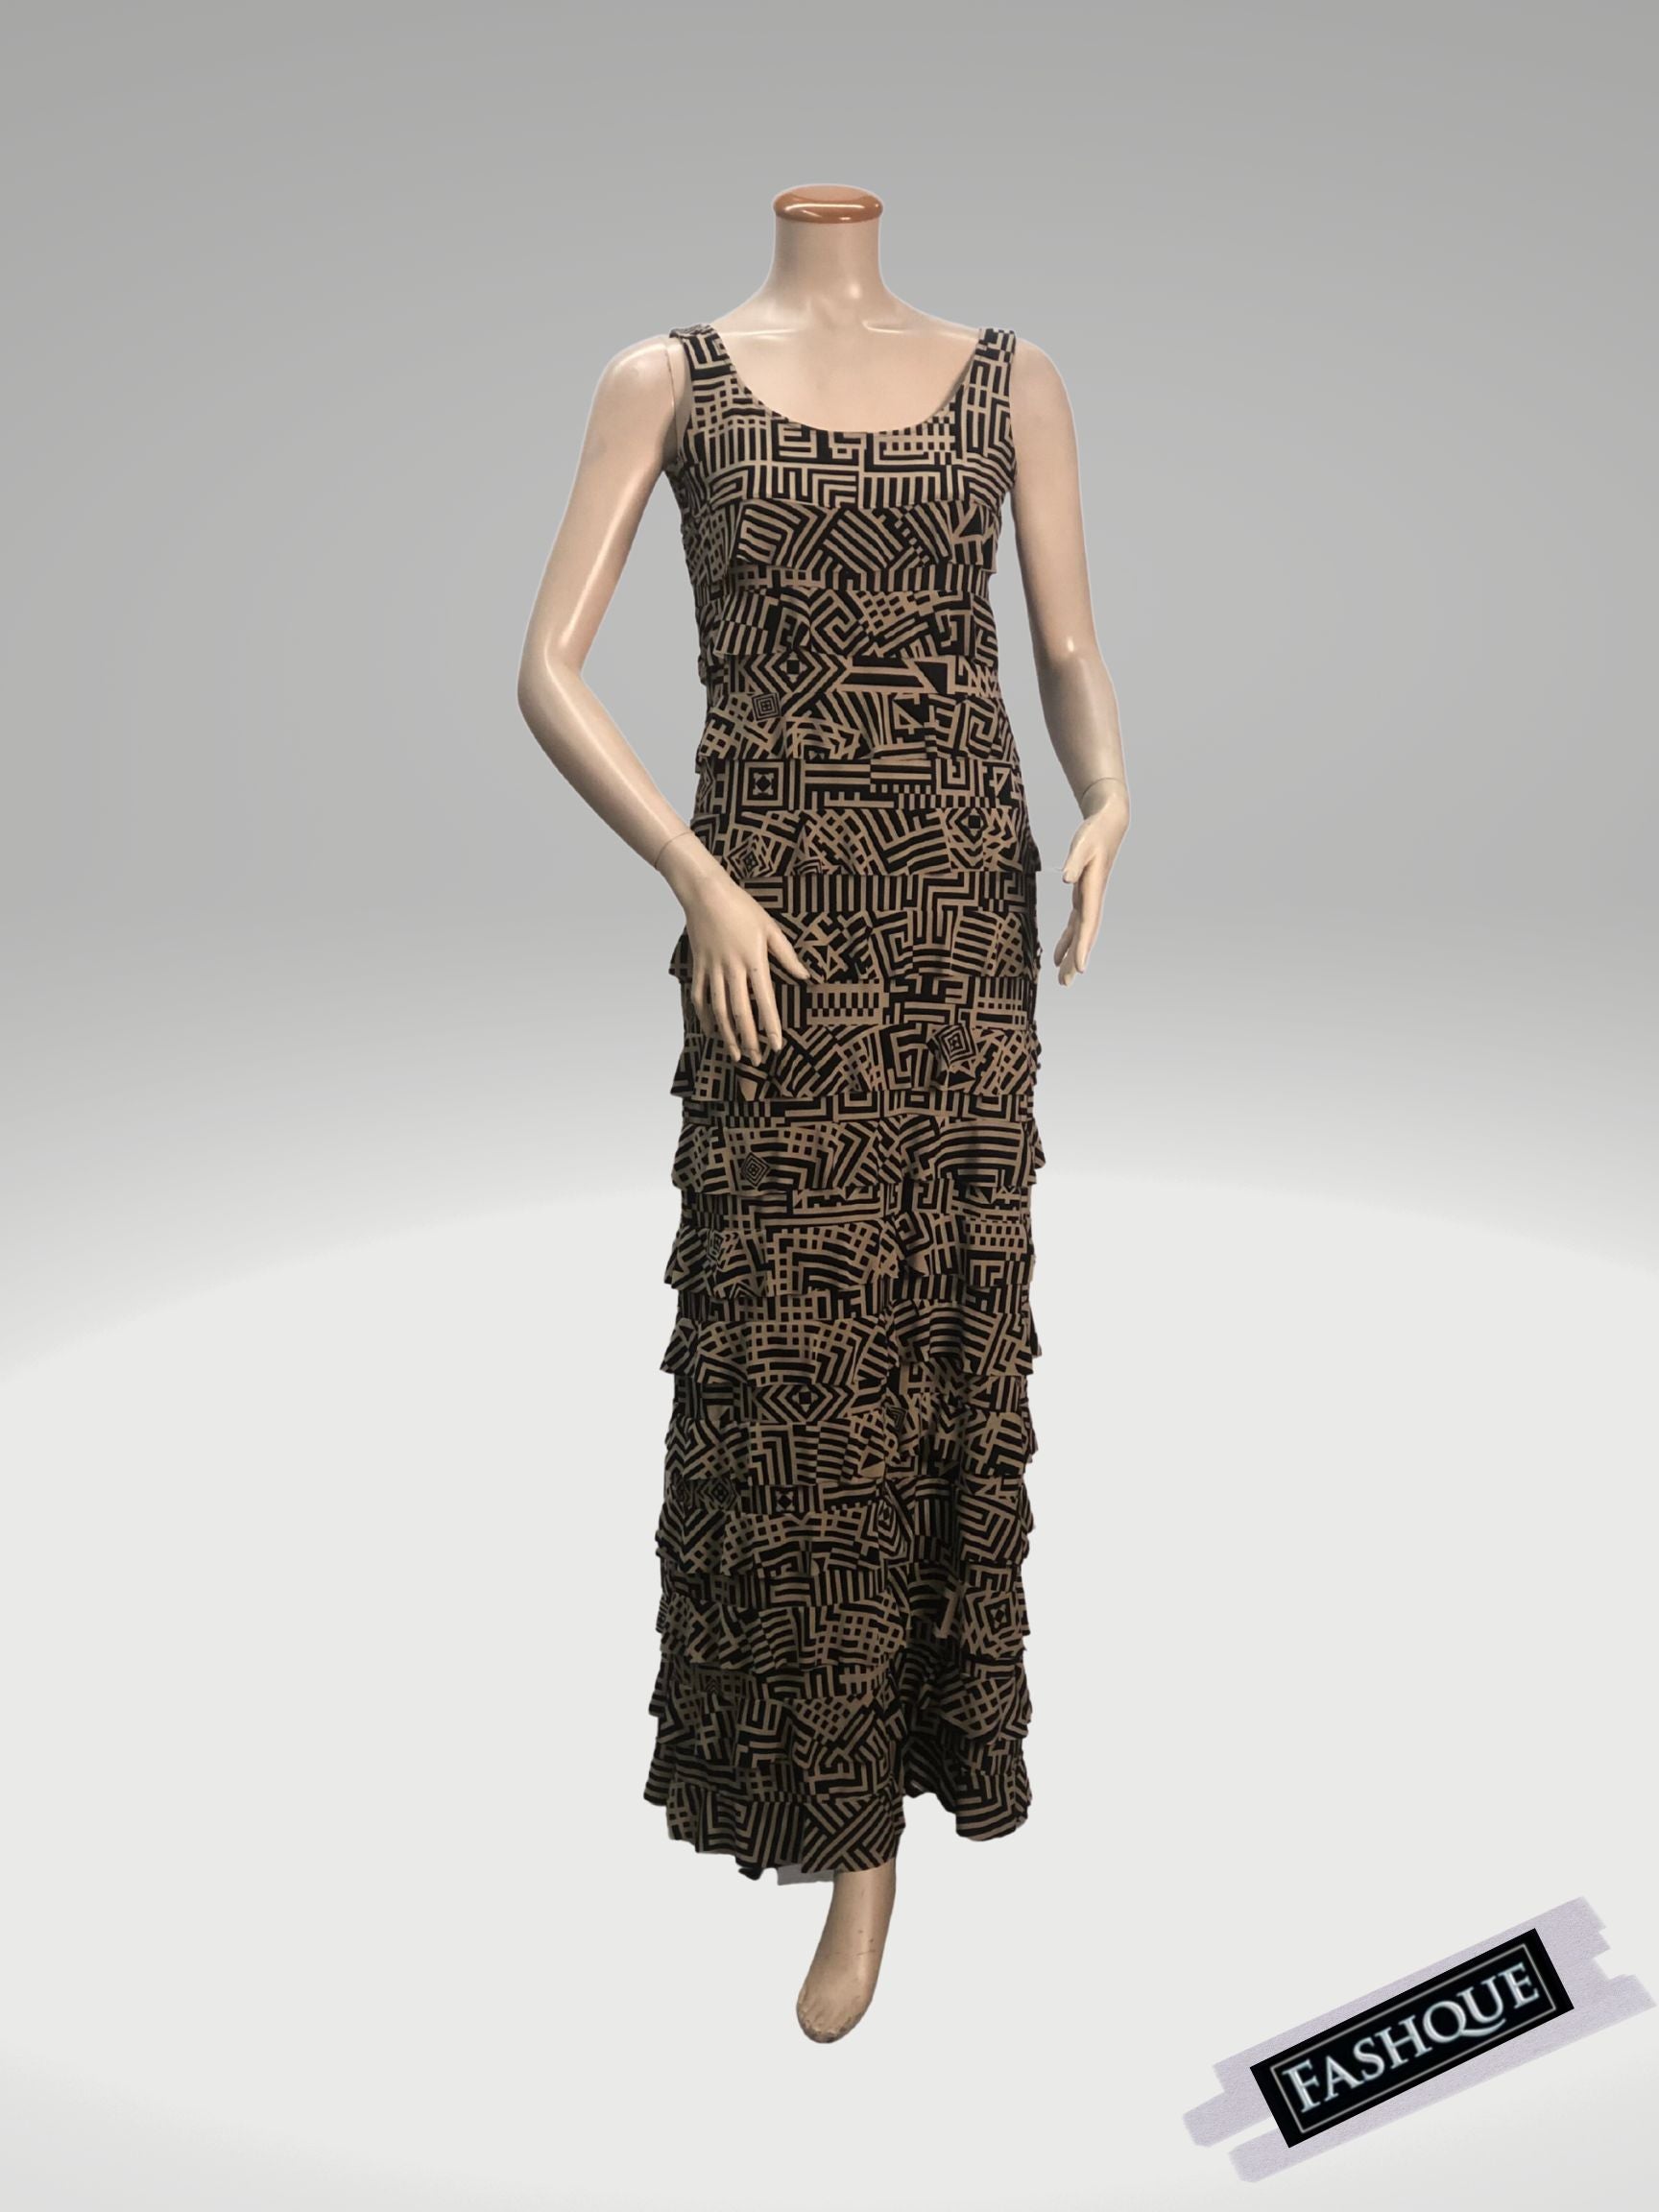 FASHQUE - Ruffle Maxi Dress Sleeveless PRINTED - D211 SALE